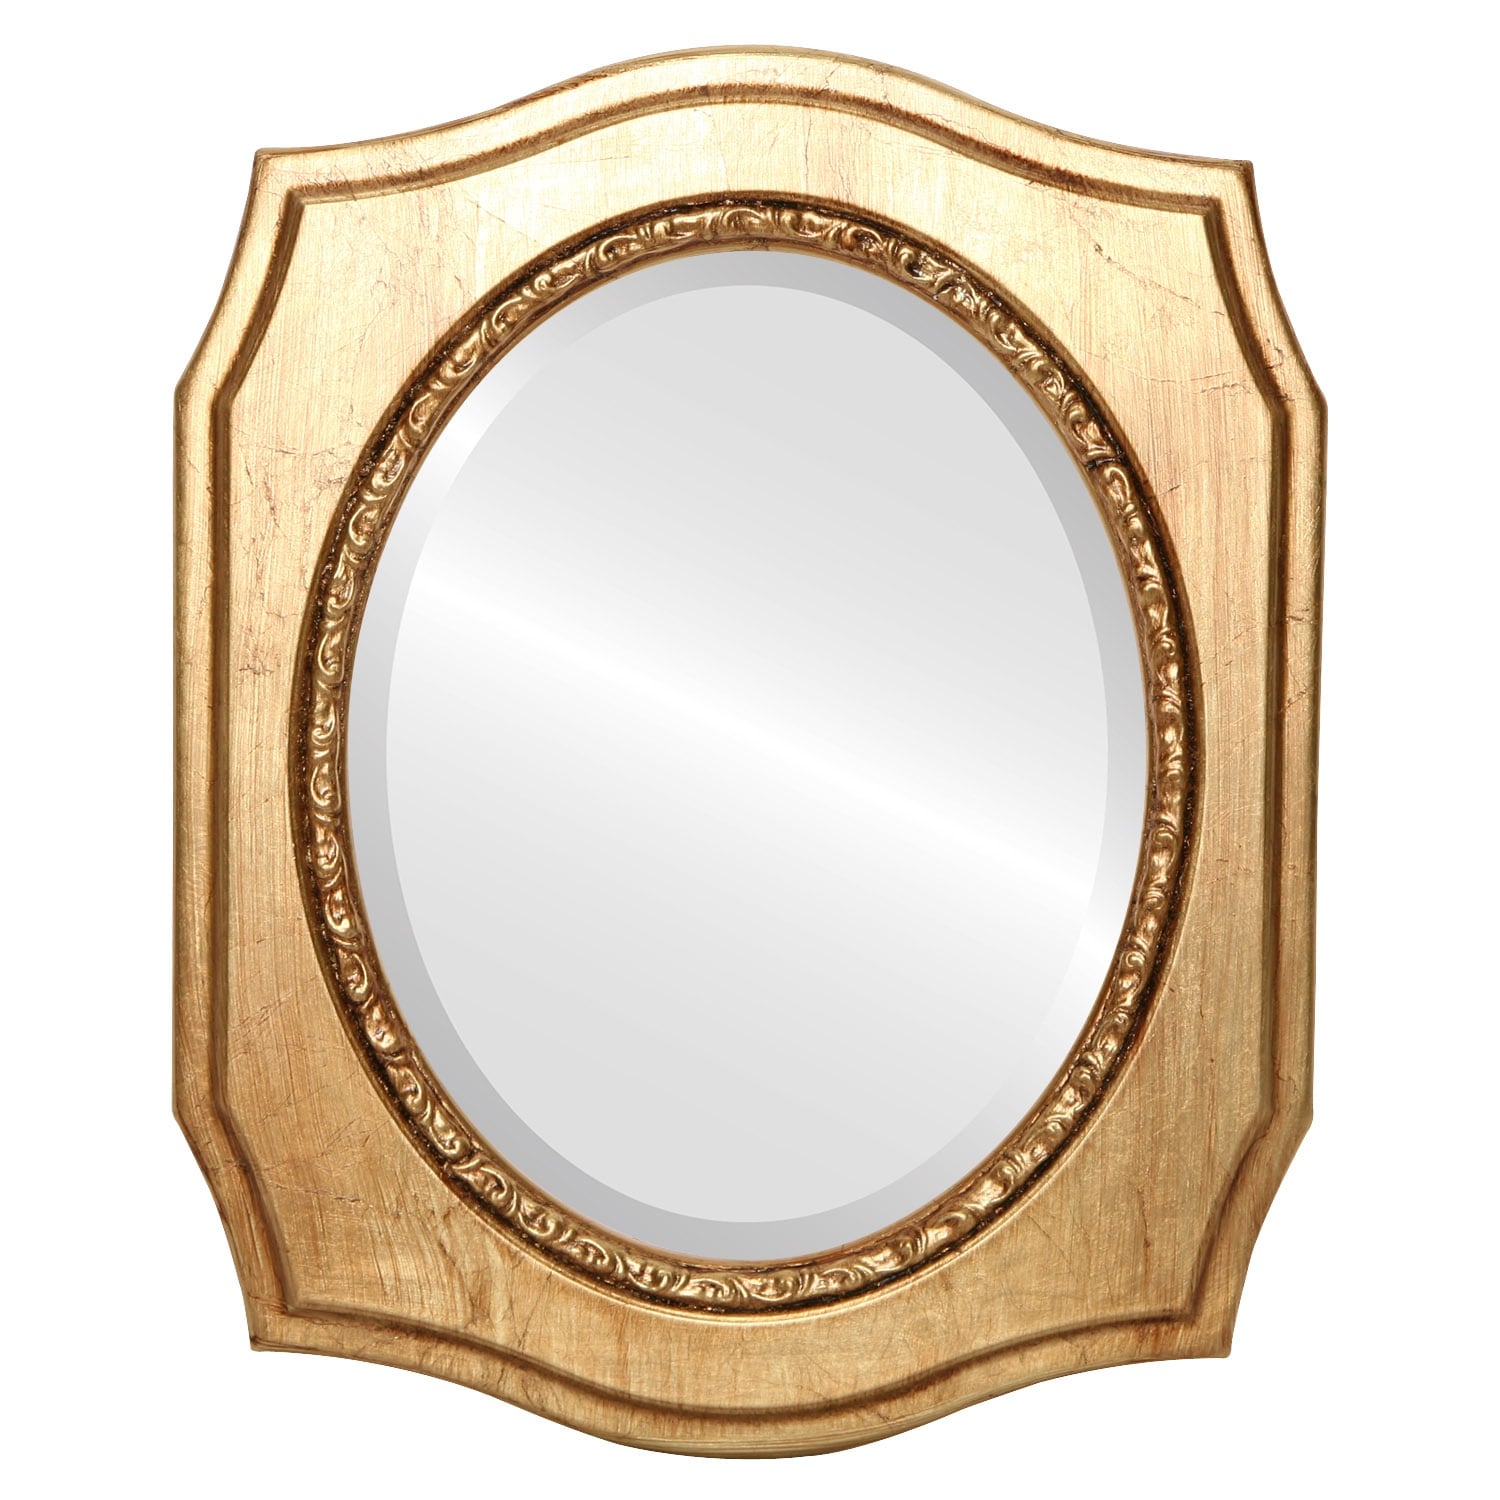 San Francisco Framed Oval Mirror in Antique Gold Leaf 19x23 Bed Bath   Beyond 33499401